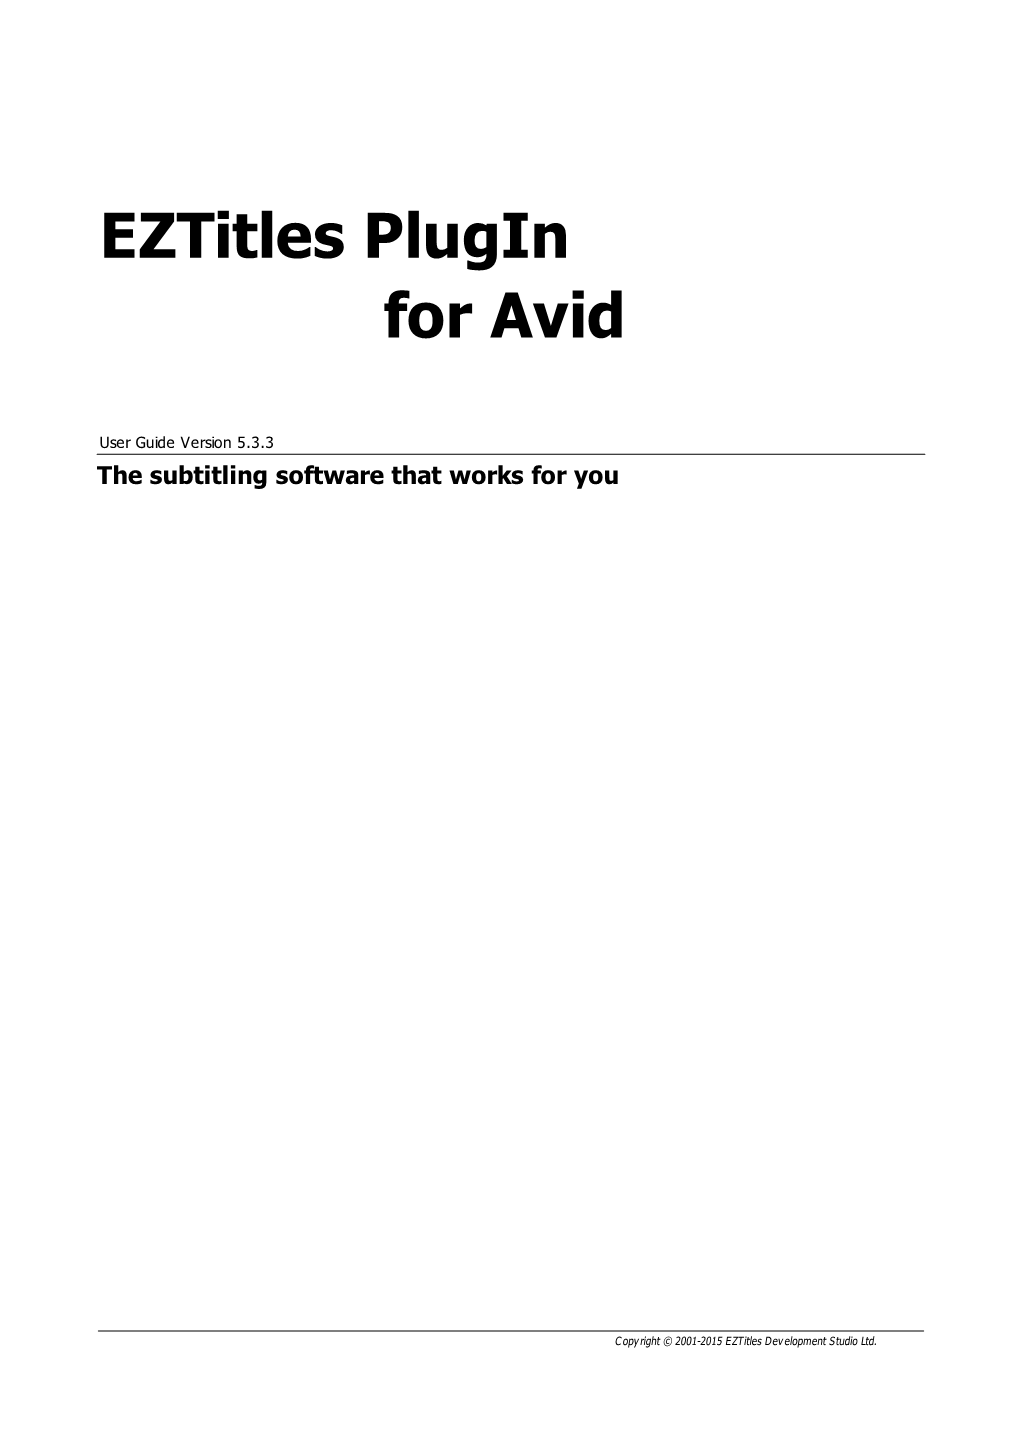 Eztitles Plug-In for Avid User Guide